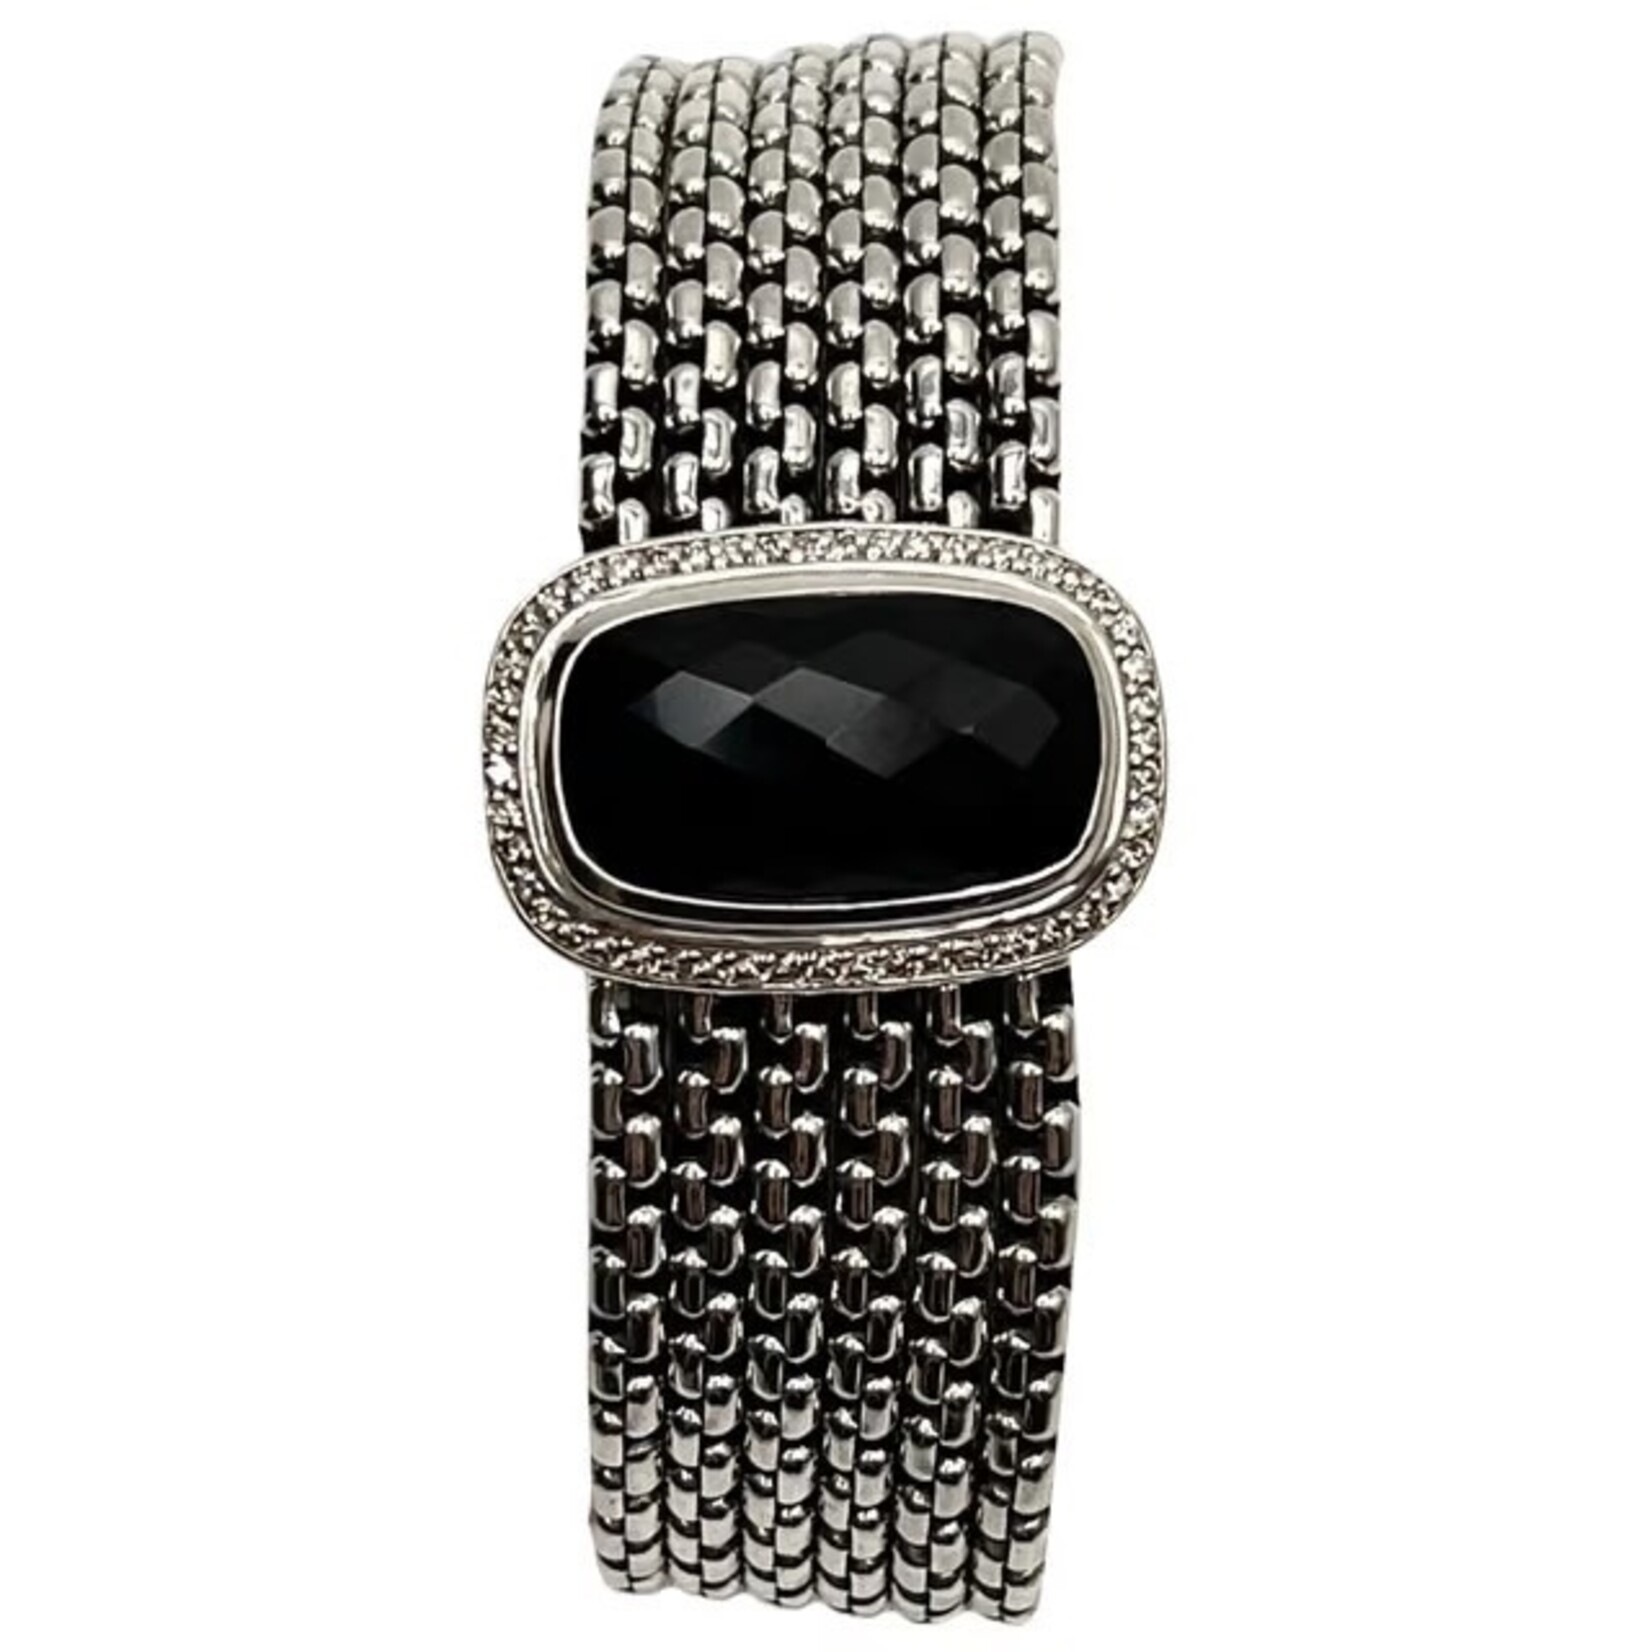 David Yurman Sterling Silver, Diamond and Onyx Multi-Row Chain Bracelet 7"